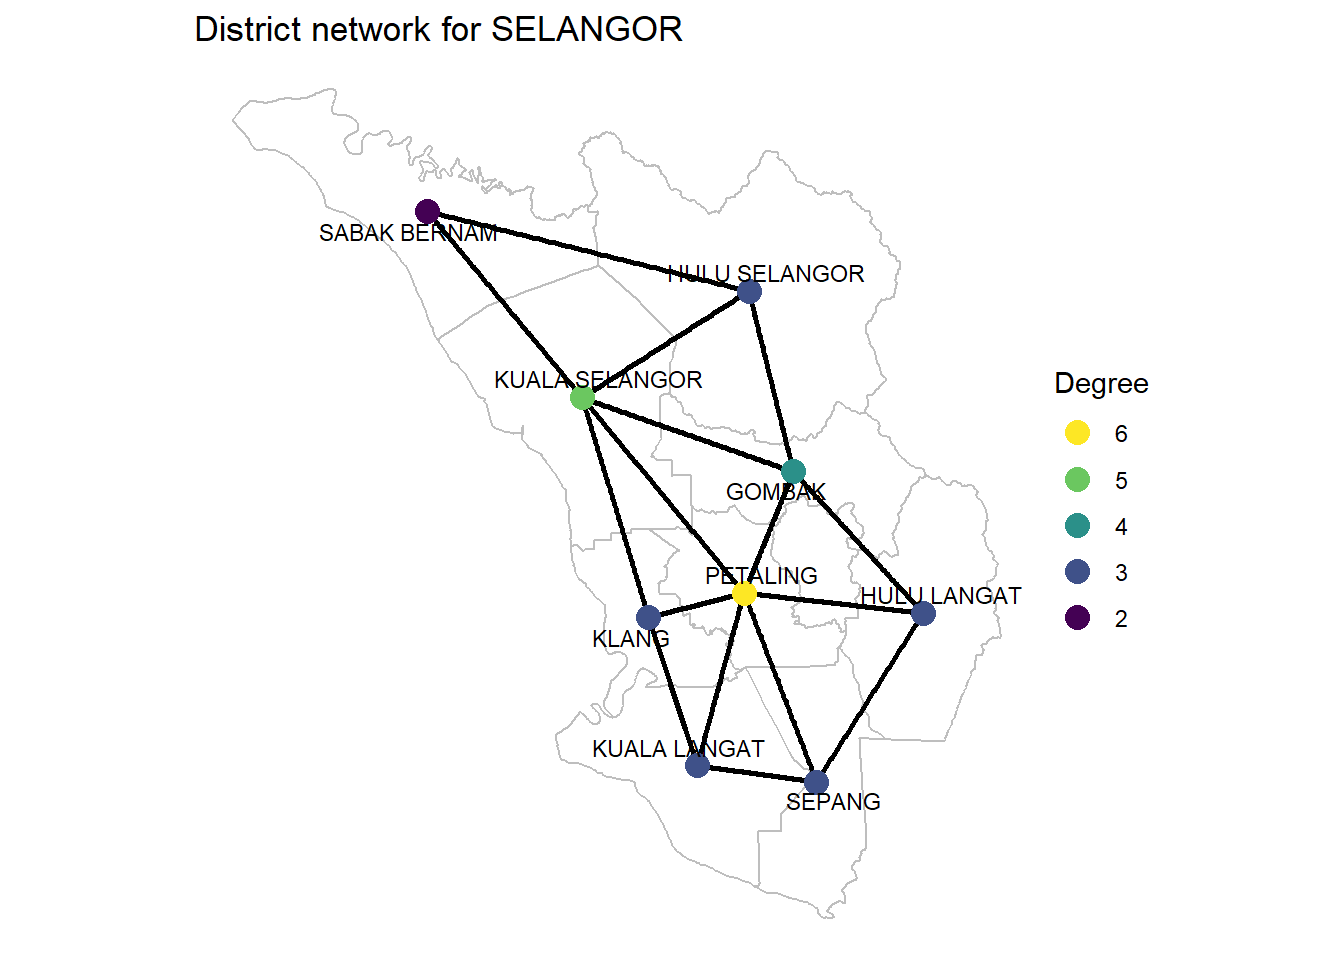 Degrees of SELANGOR district network